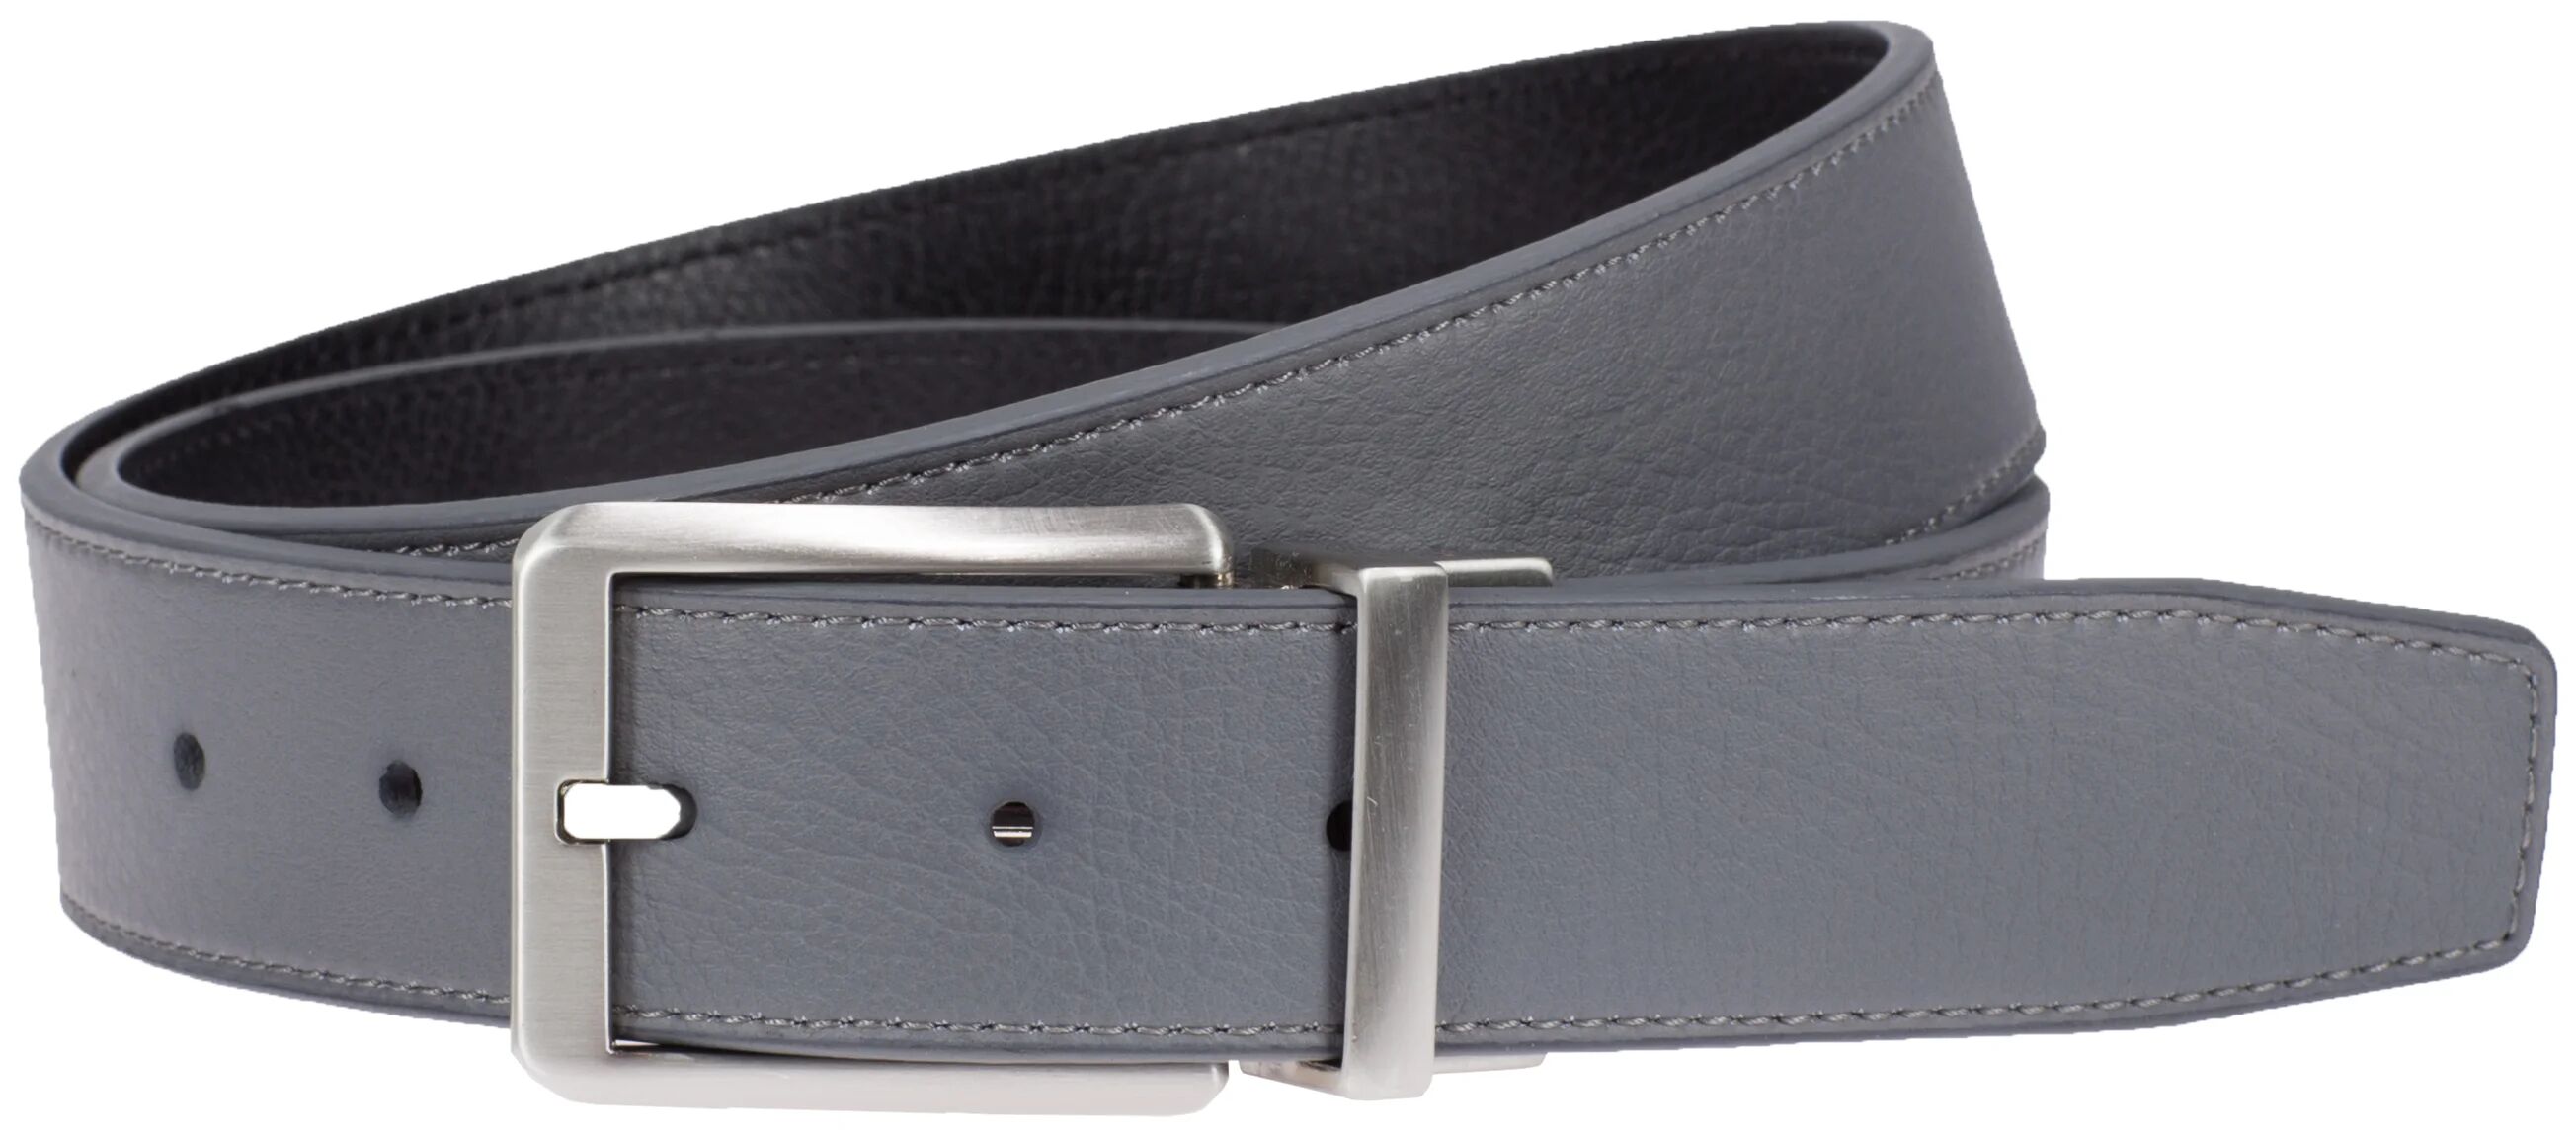 Nike Core Reversible Men's Golf Belt - Grey, Size: X-Large (42/44)